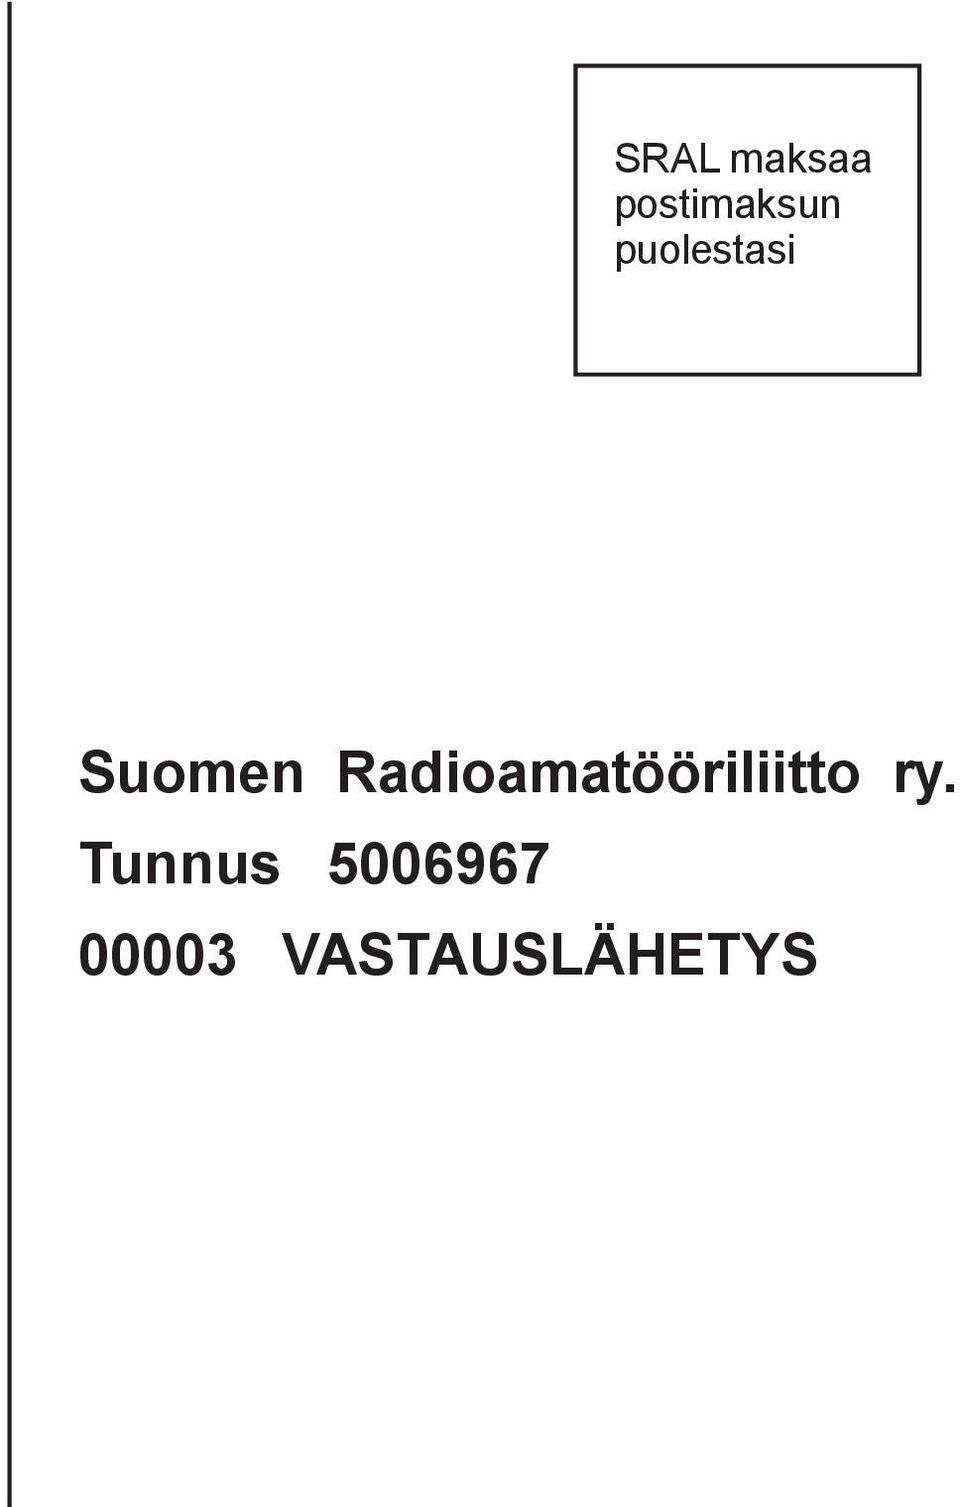 Radioamatööriliitto ry.